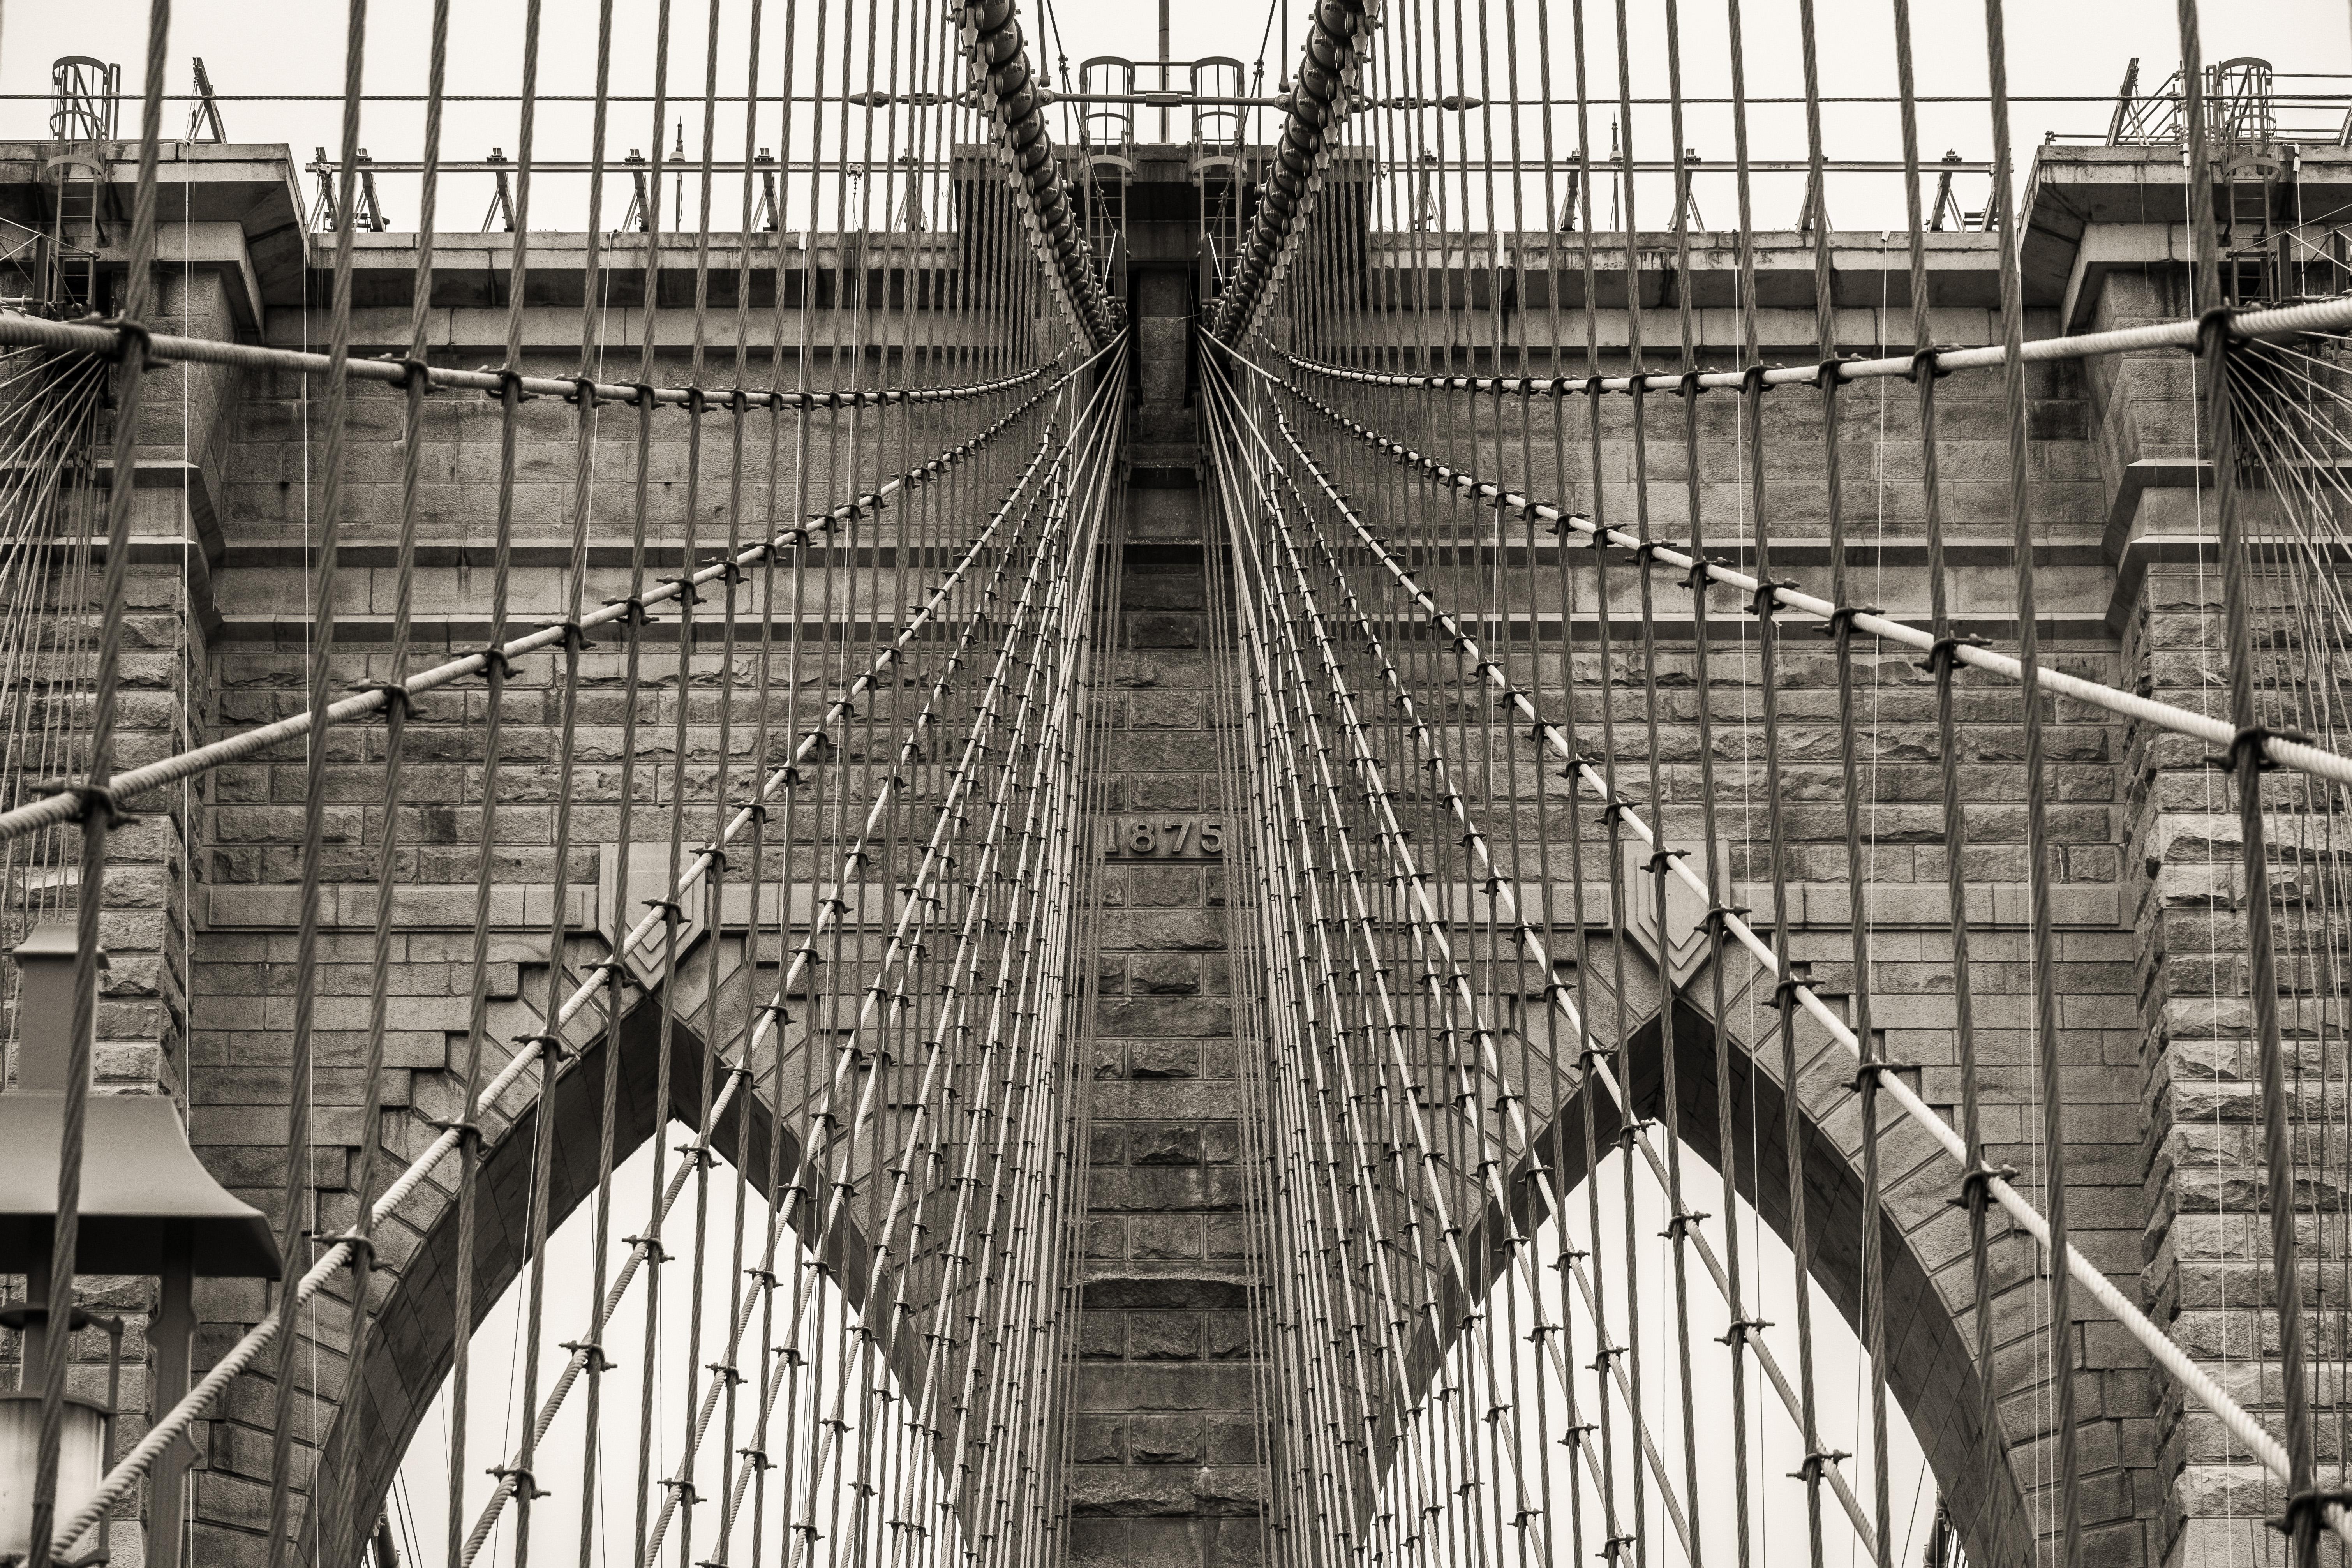 Brooklyn Bridge 1875 - Photograph by Nick Vedros